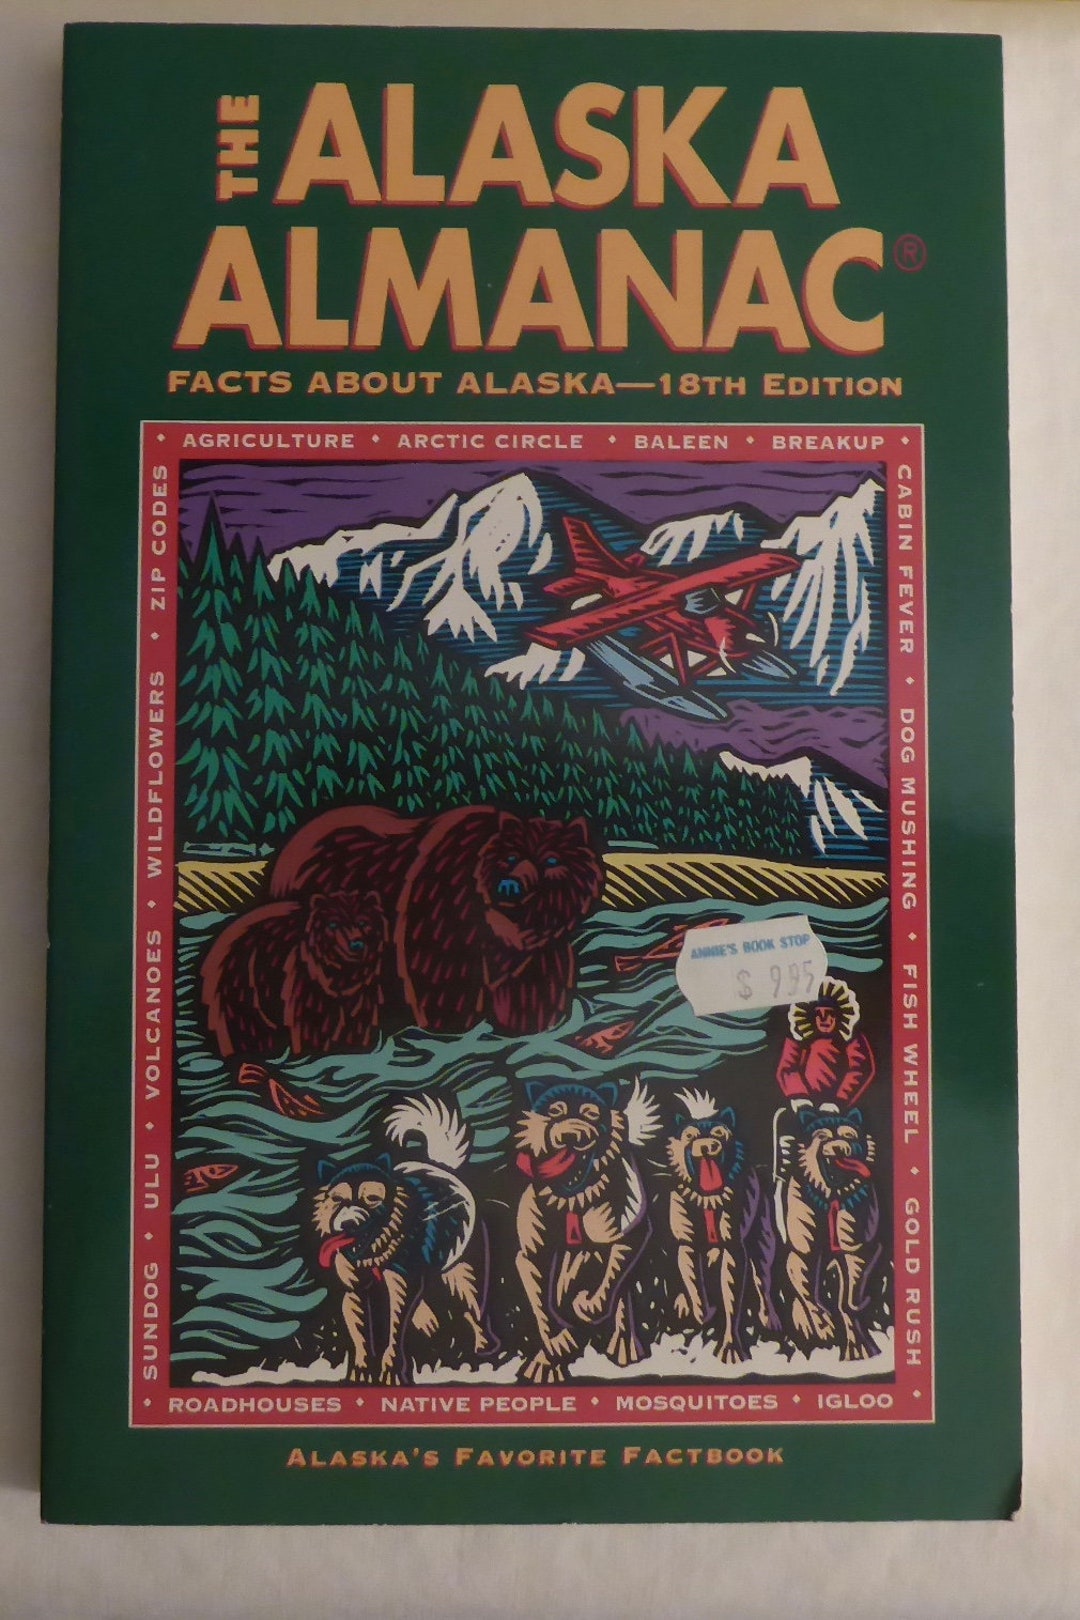 Copy of the Alaska Almanac Facts About Alaska 18th Edition - Etsy